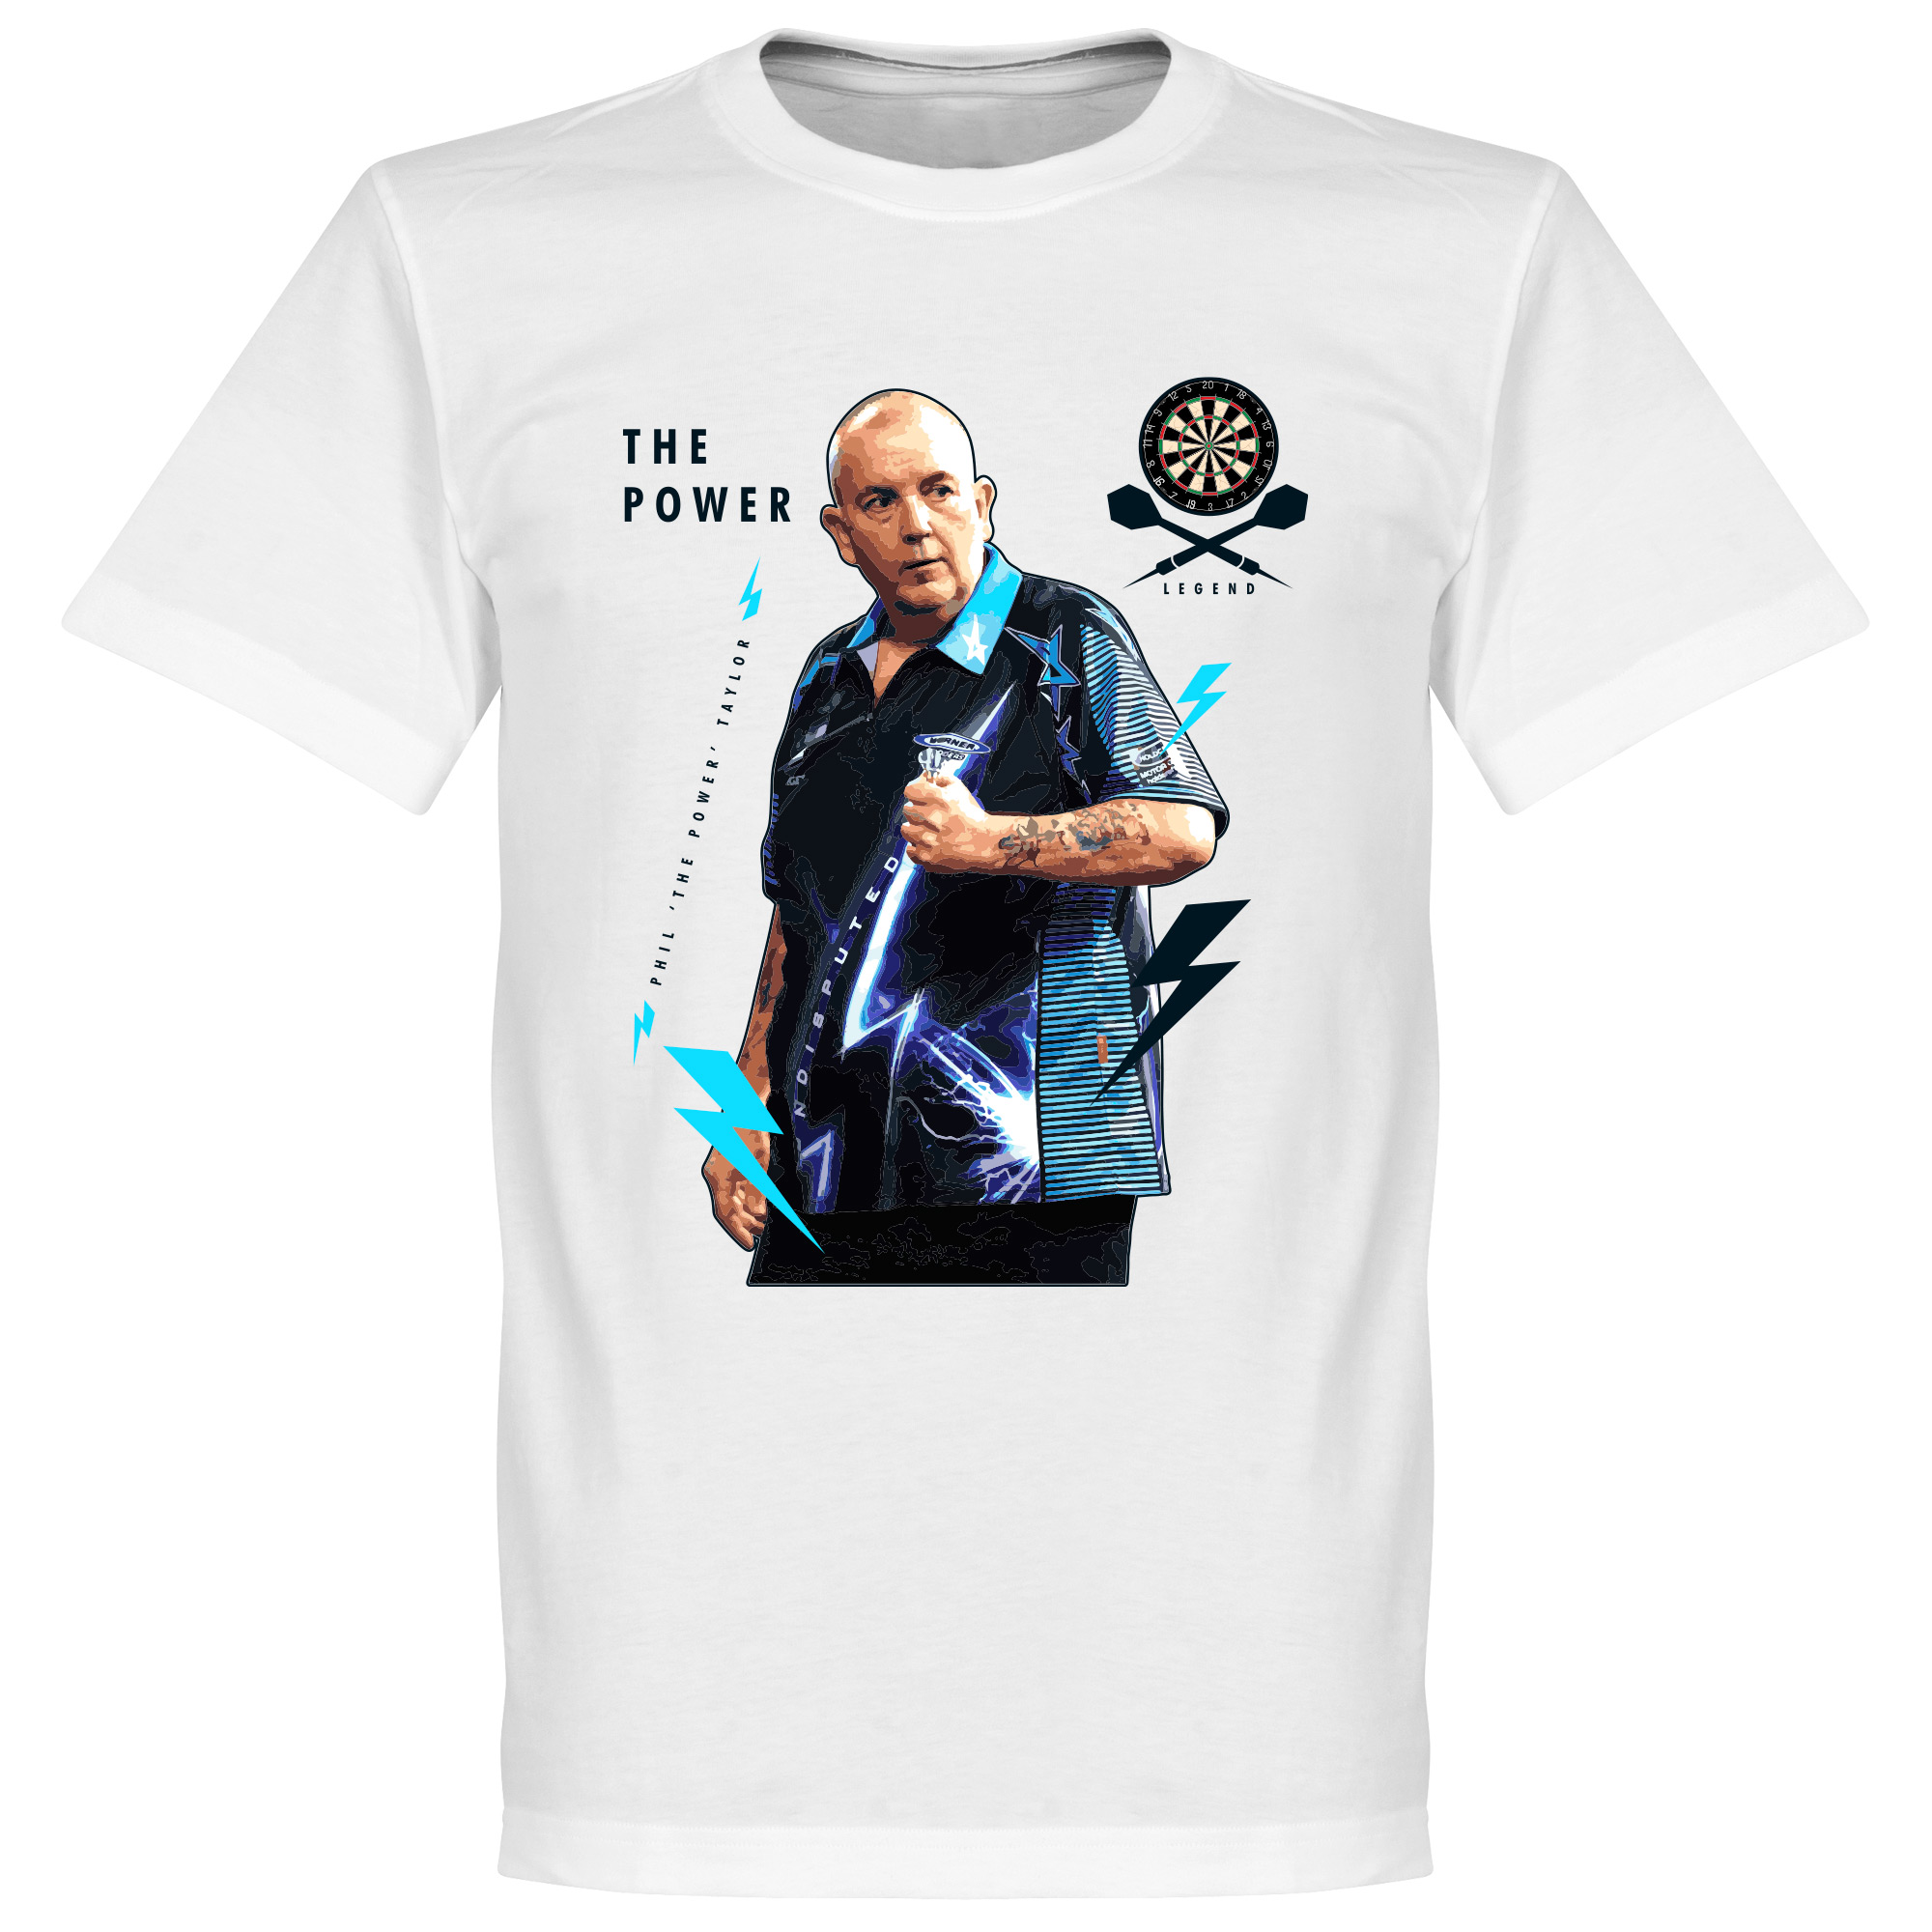 Phil The Power Taylor Darts T-Shirt XS